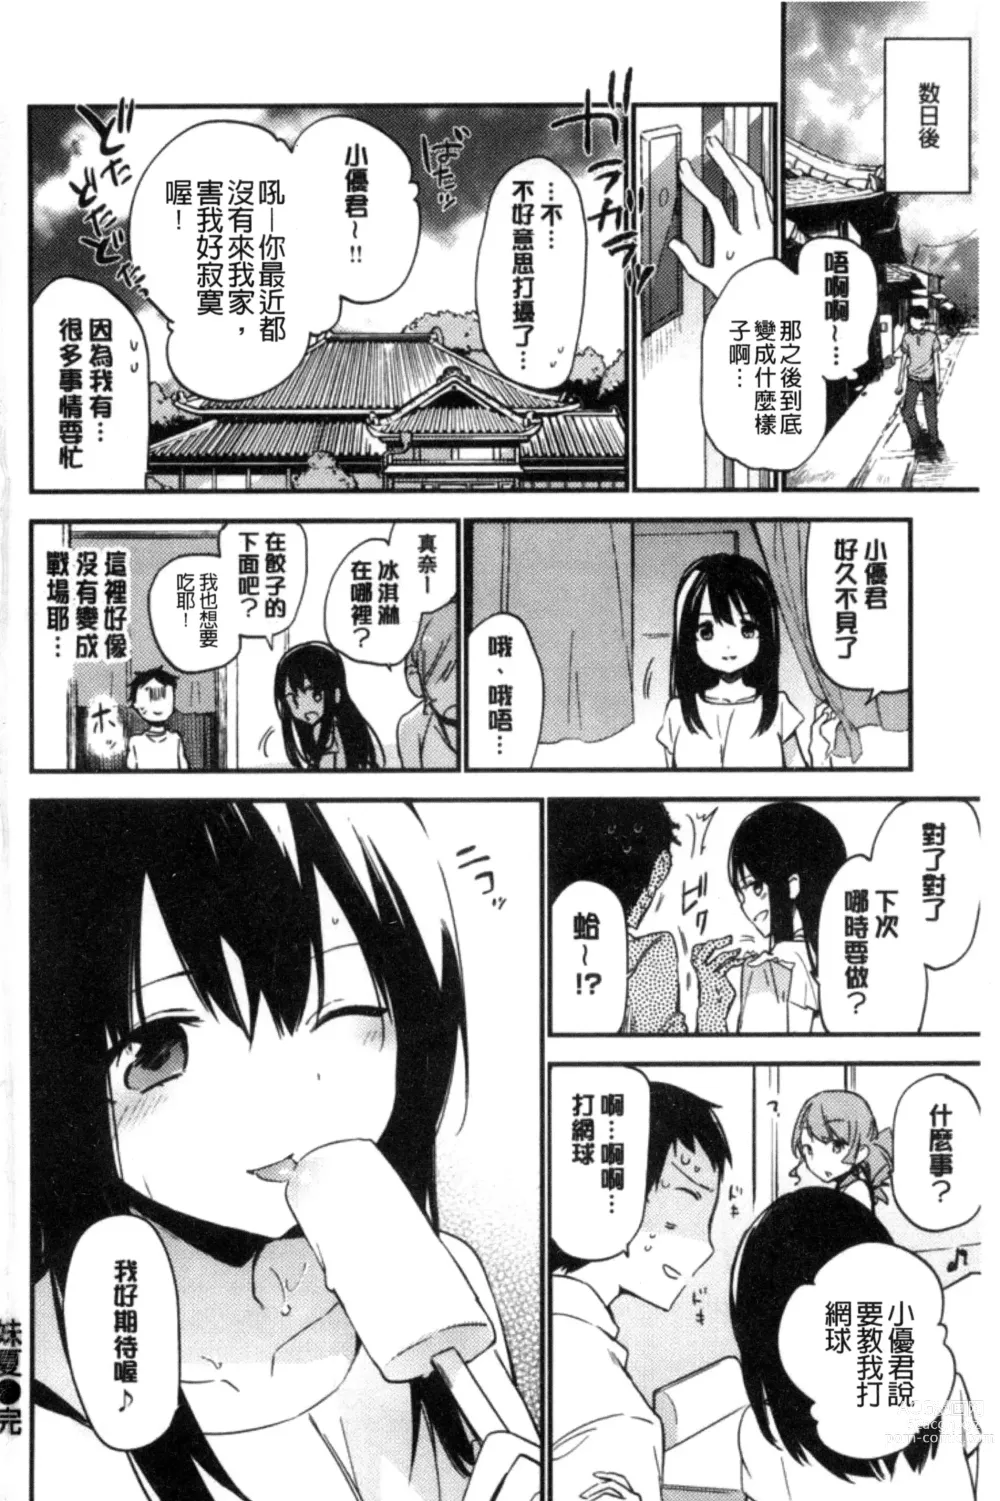 Page 210 of manga Naishogoto